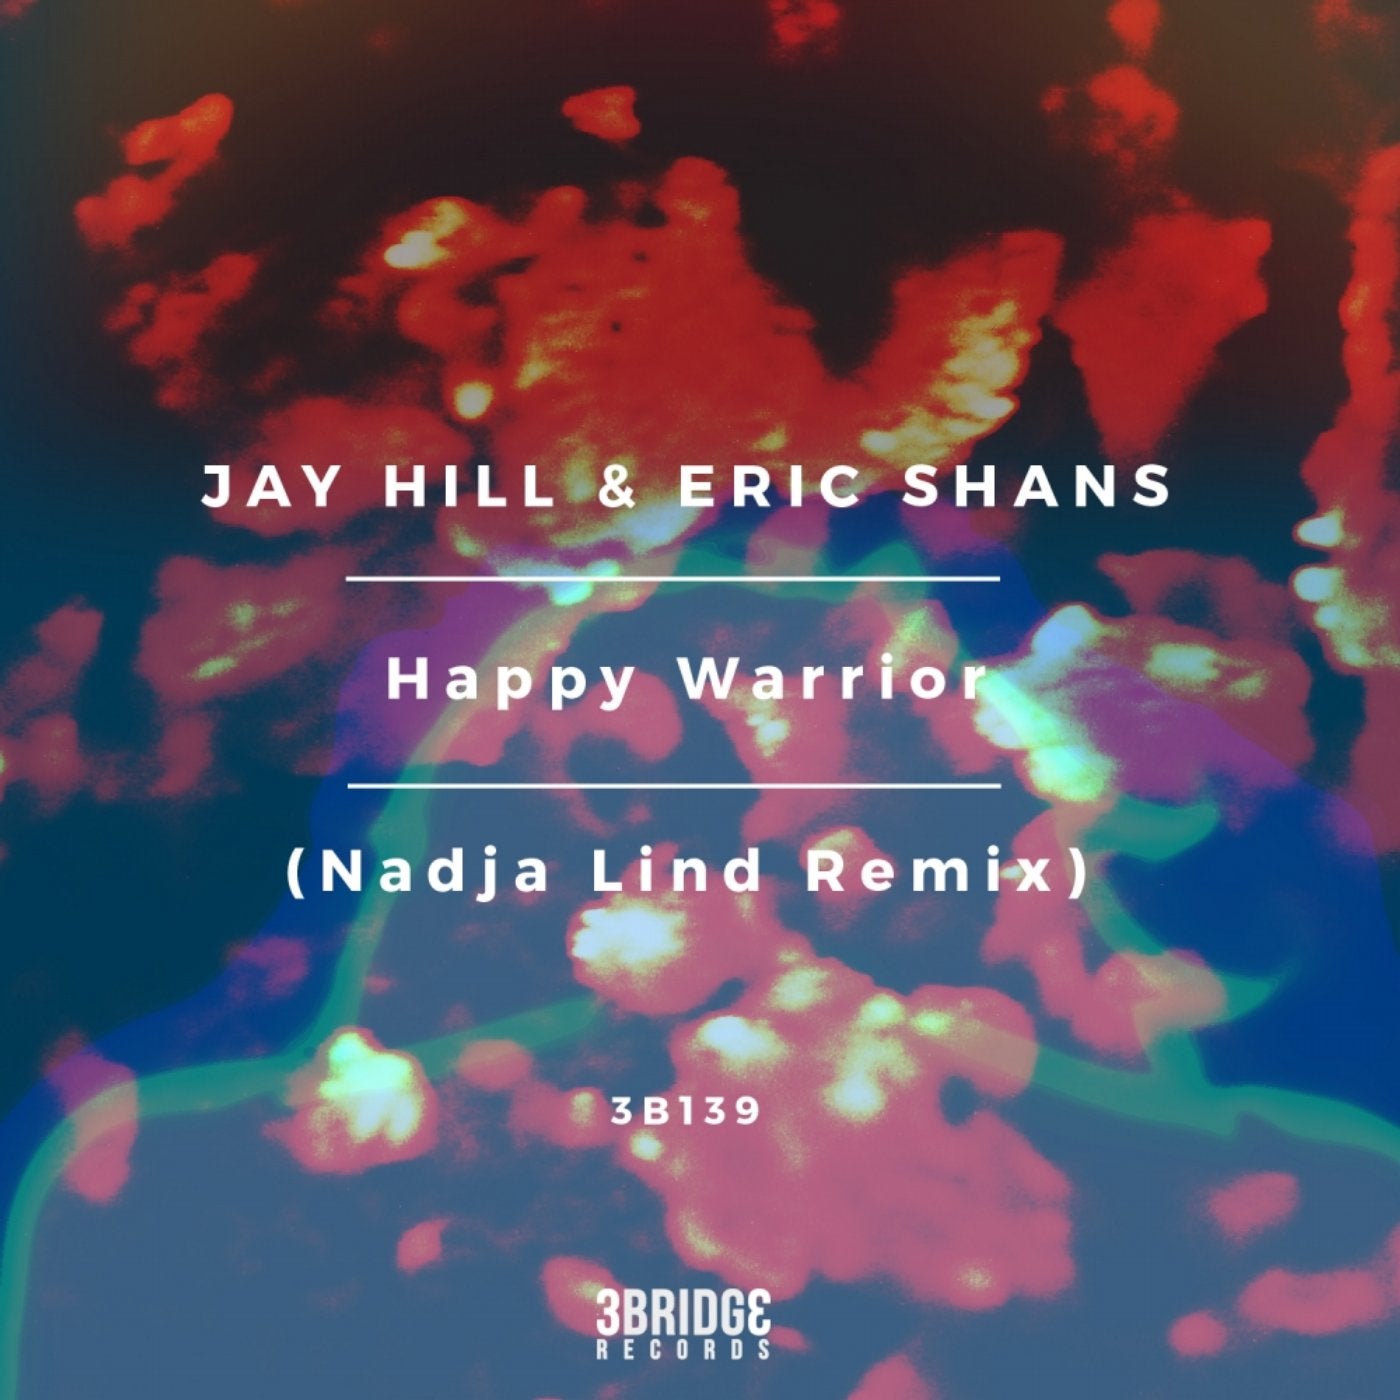 Happy Warrior (Nadja Lind Remix)